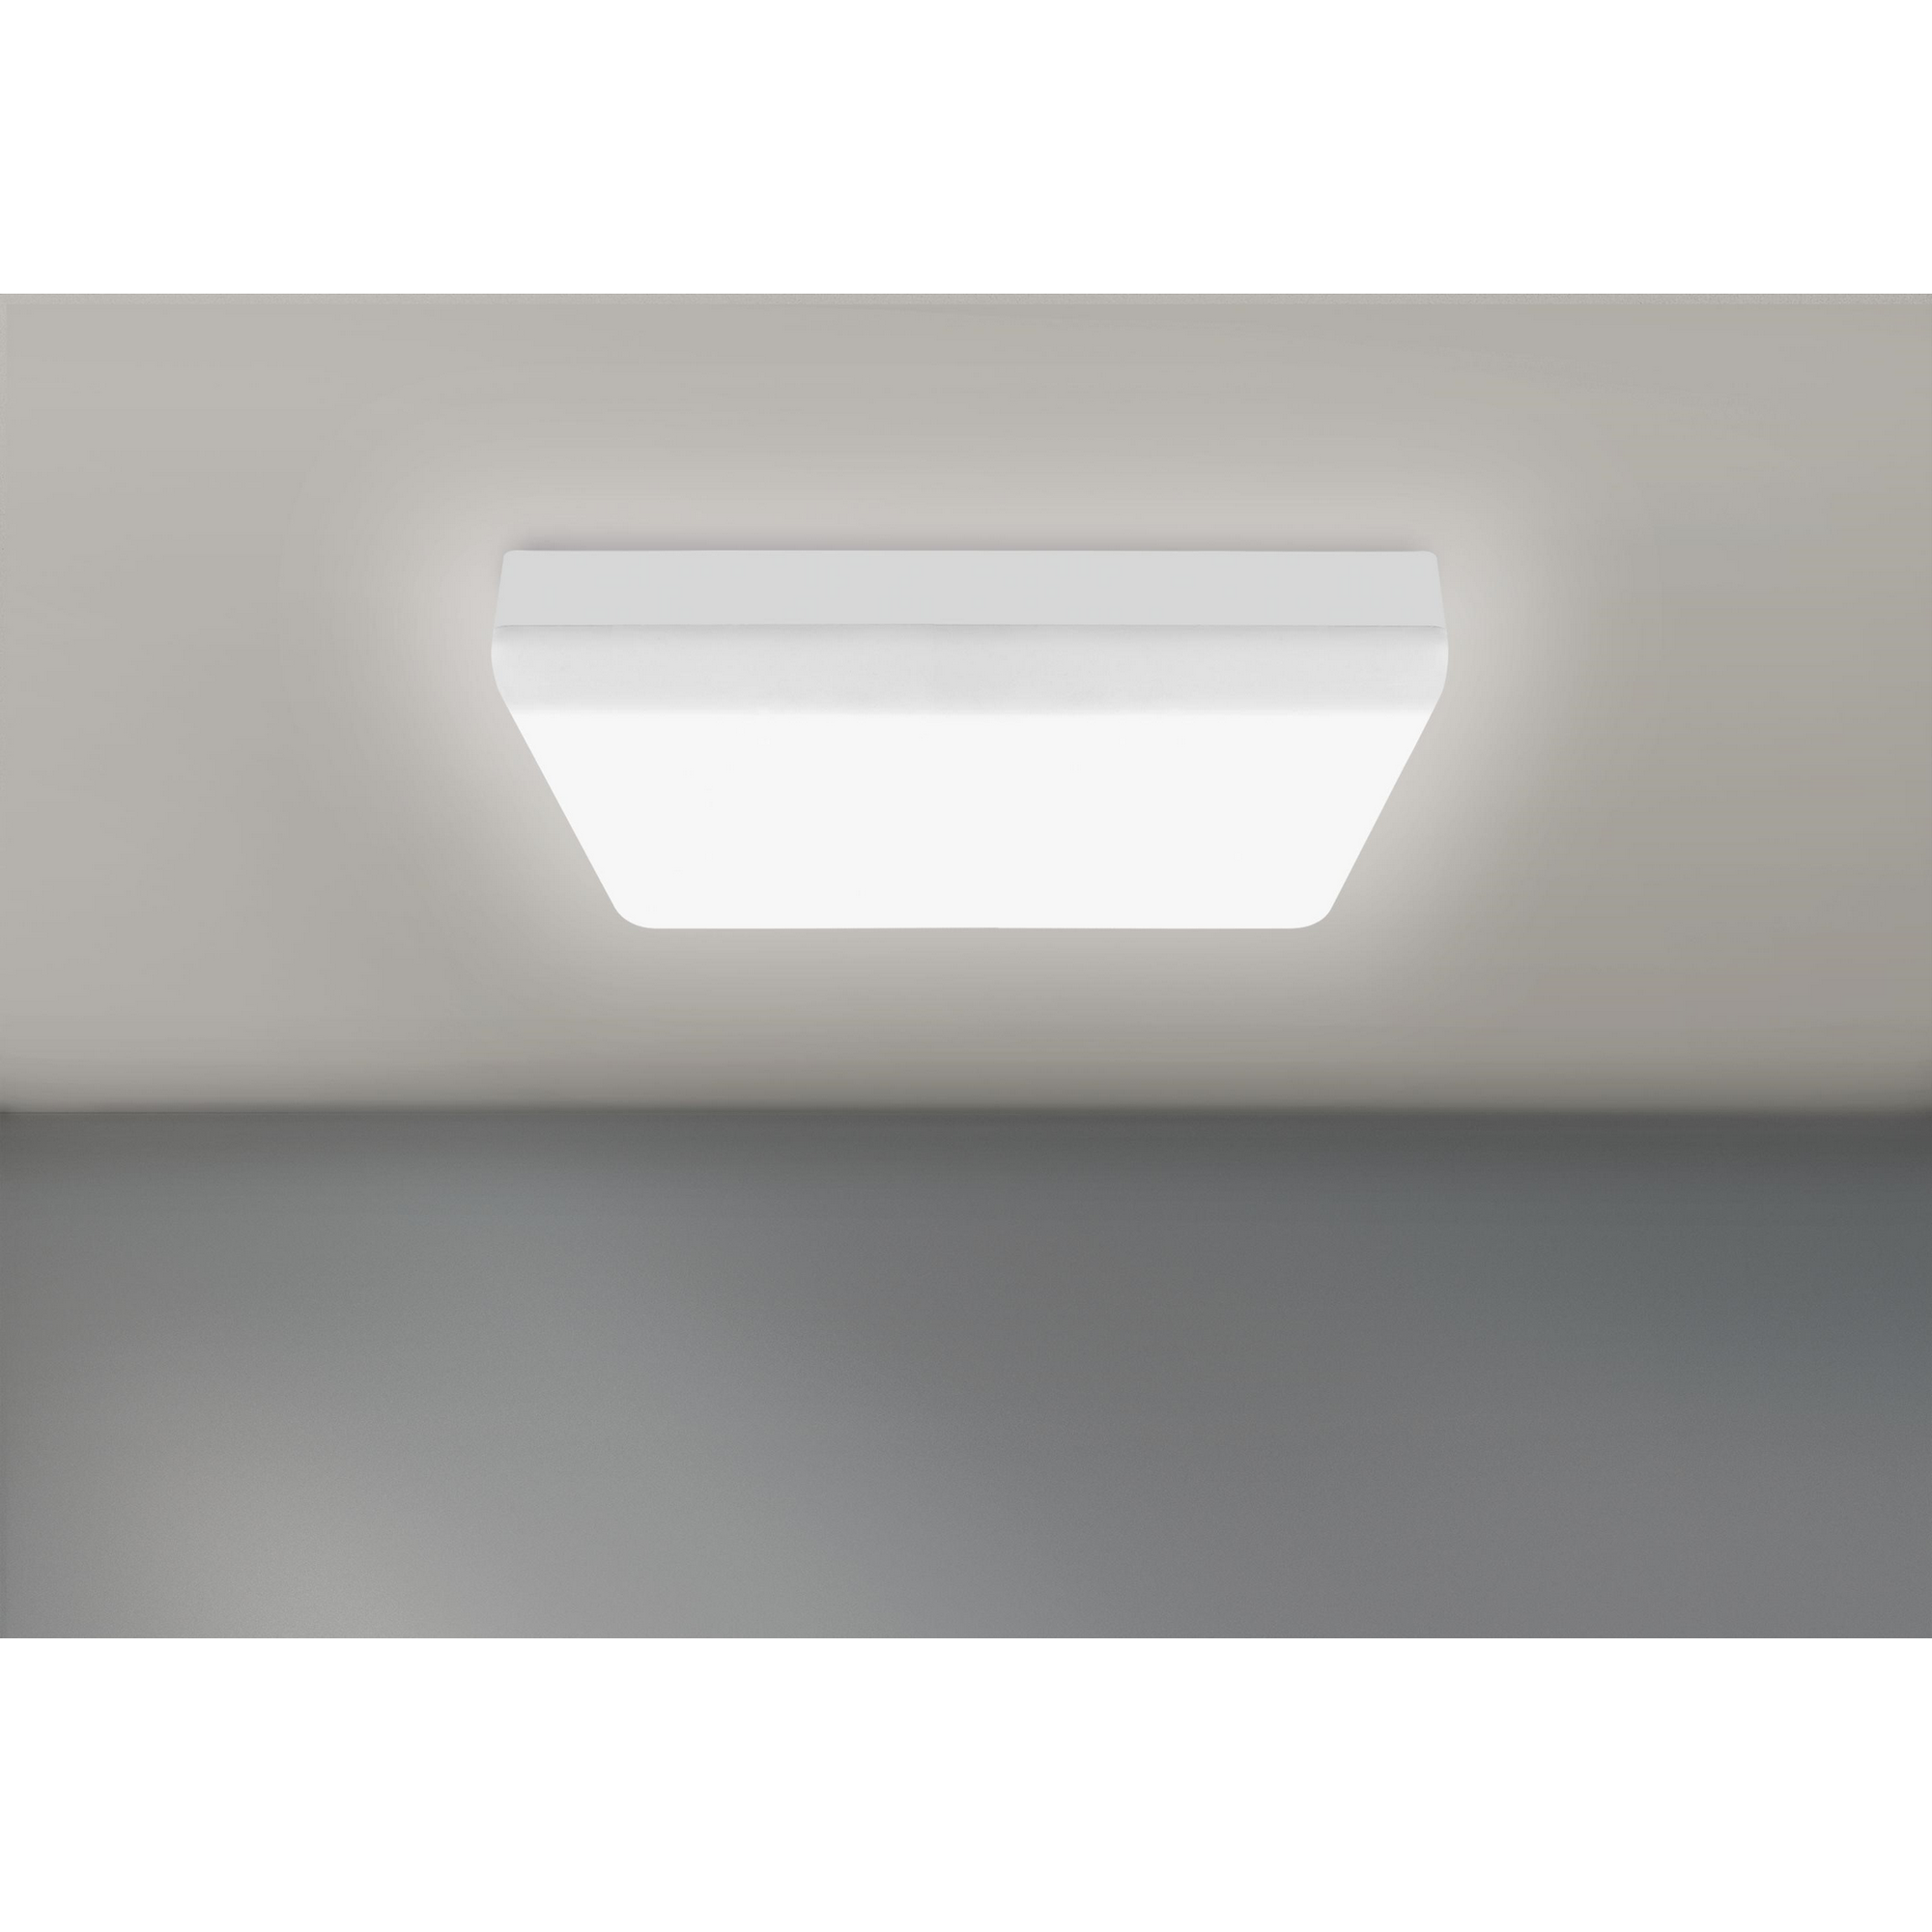 LED-Deckenleuchte weiß 22,8 x 22,8 x 4,6 cm, 15 W, 1400 lm + product picture